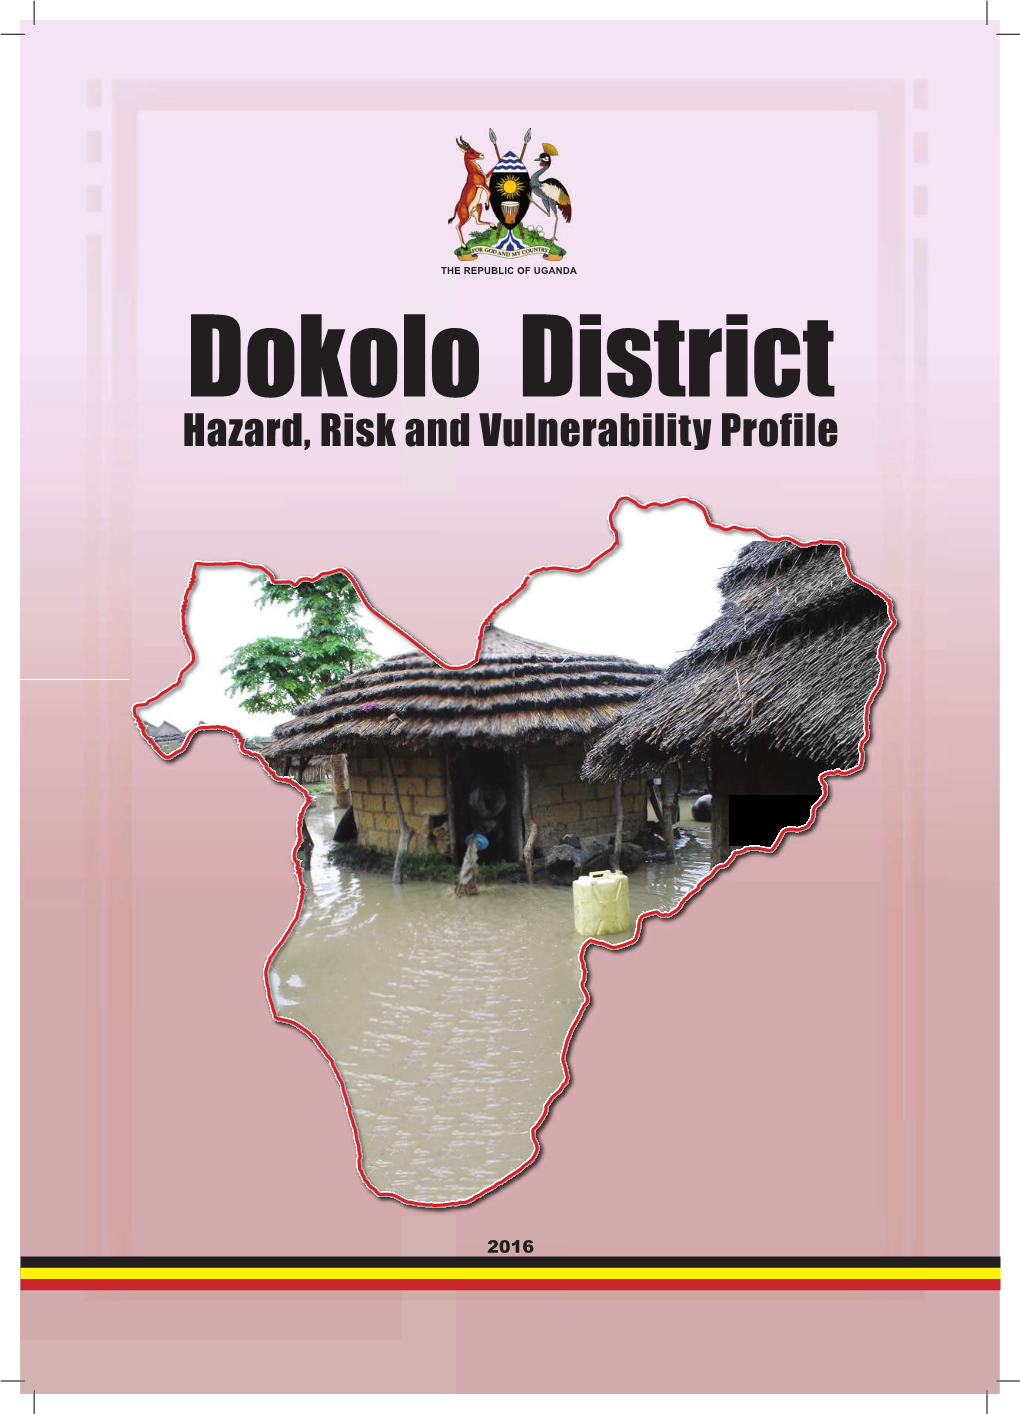 Dokolo District HRV Profile.Indd